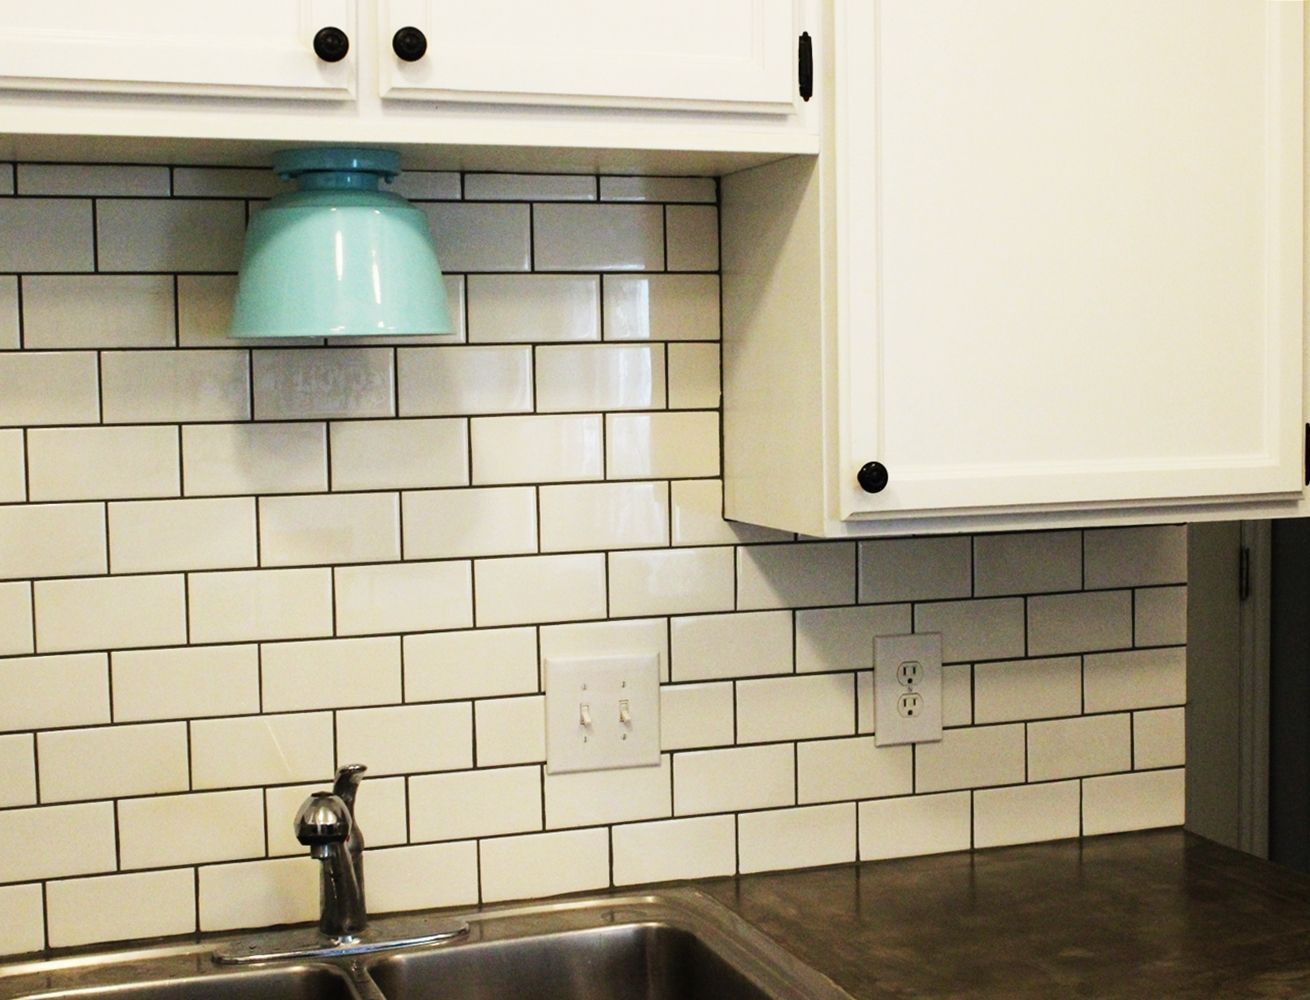 Beautiful kitchen backsplash with tiles and turquoise lighting fixture